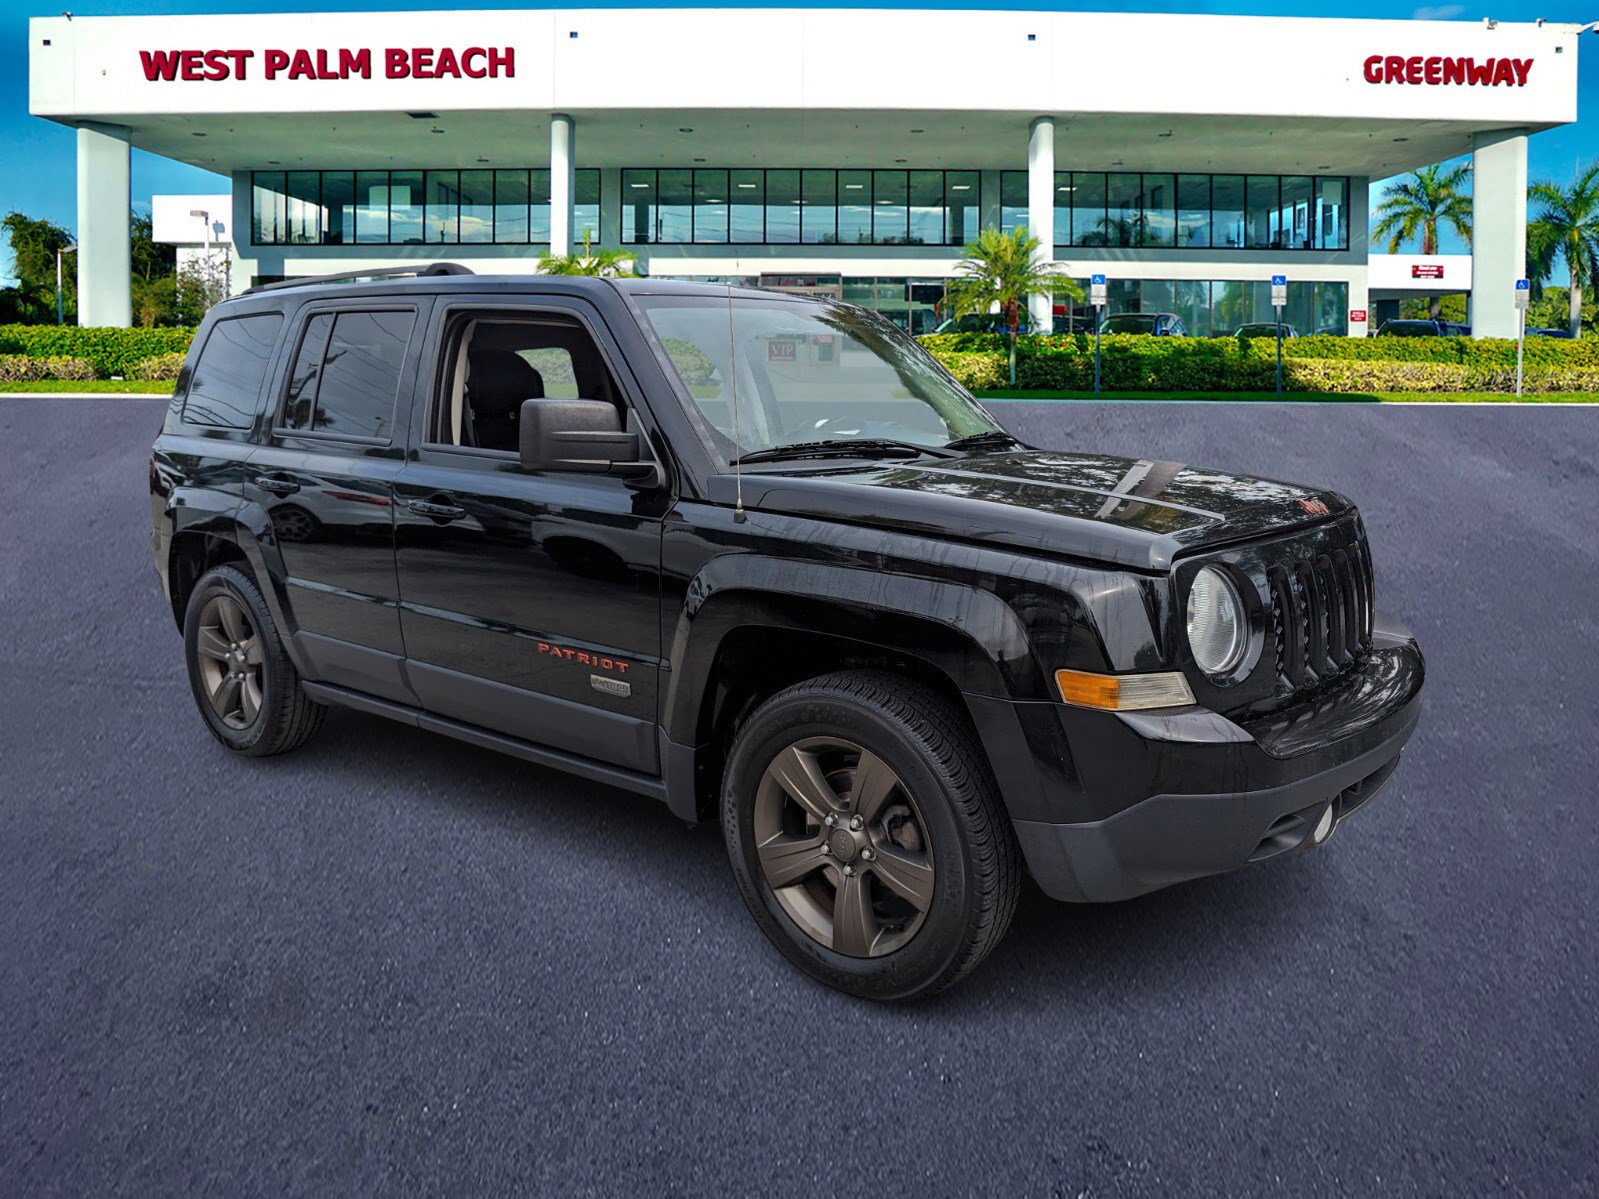 2017 Jeep Patriot West Palm Beach FL